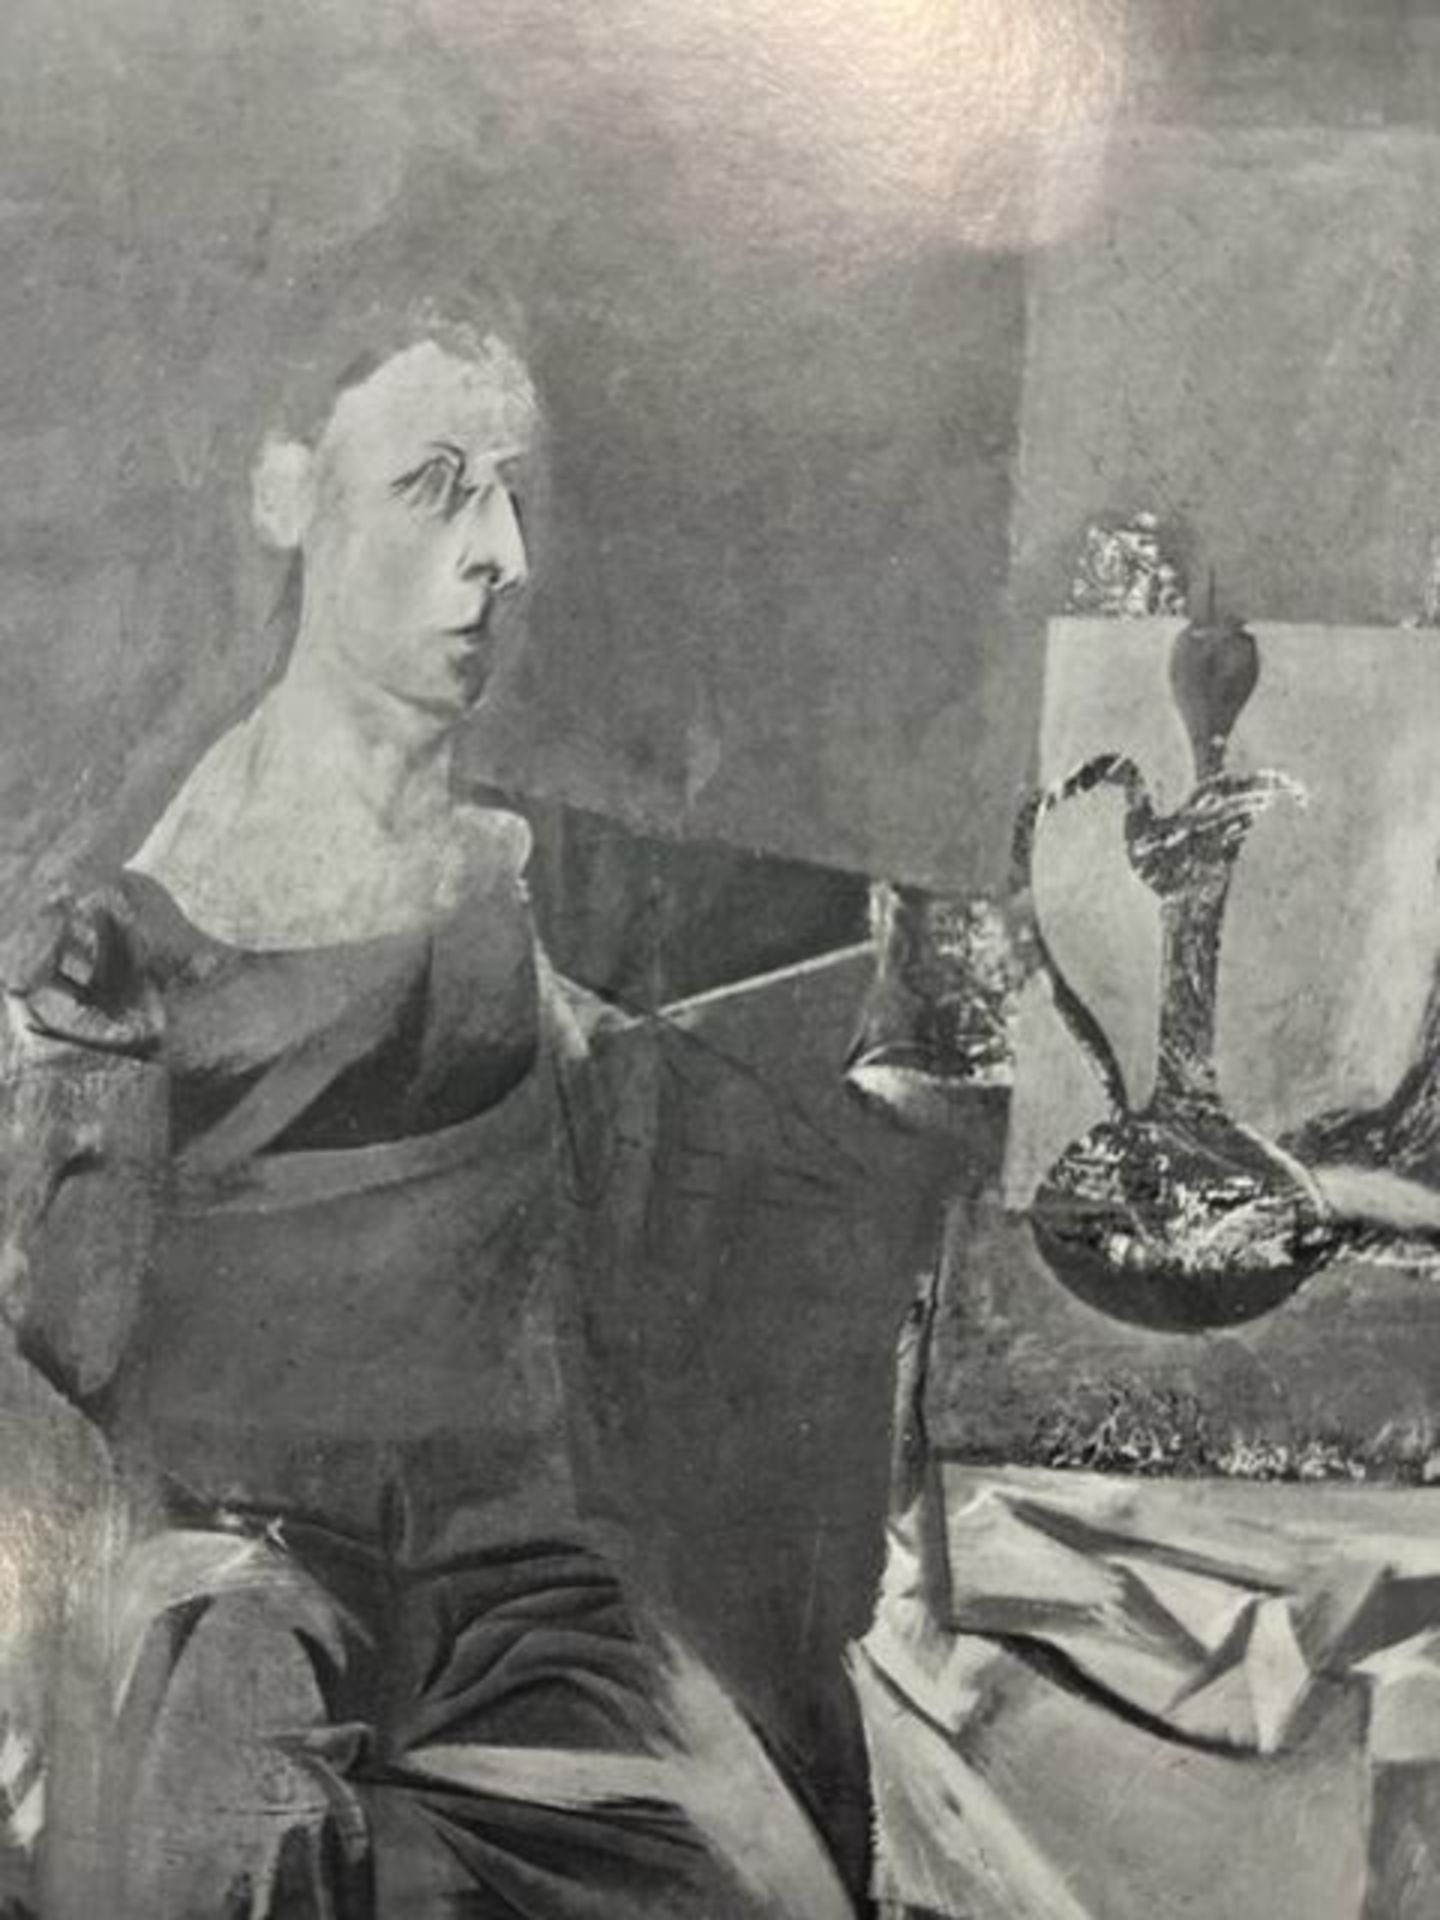 Willem de Kooning "Glazier" Print. - Bild 5 aus 6